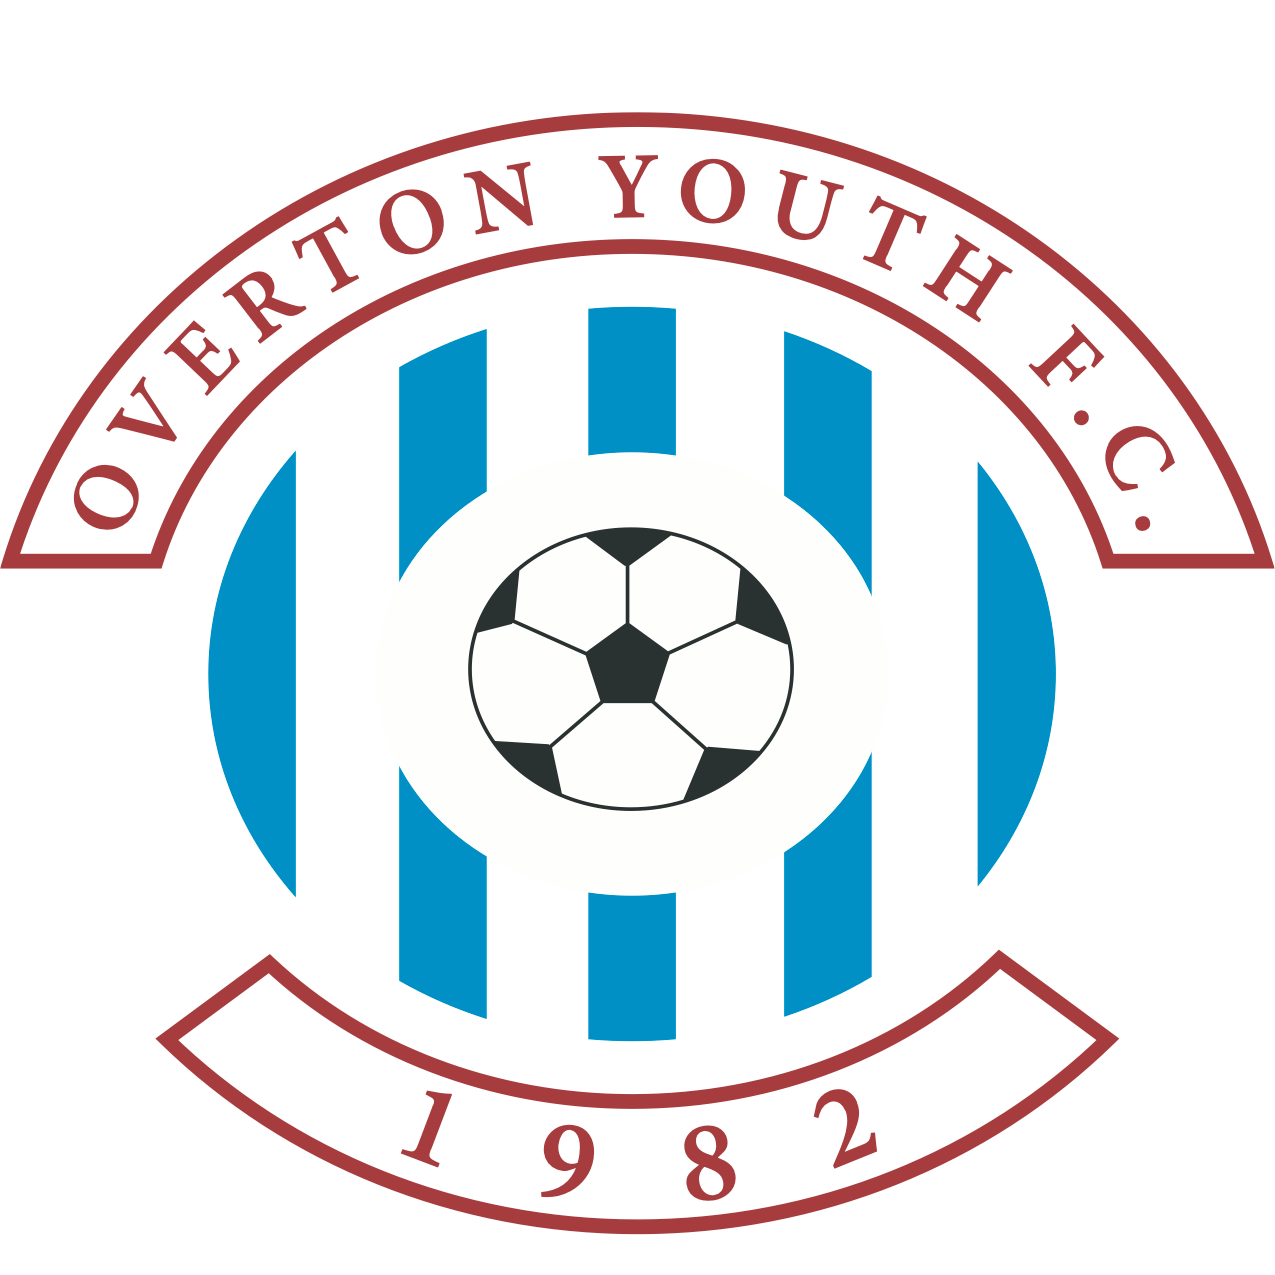 Overton Youth Football Club